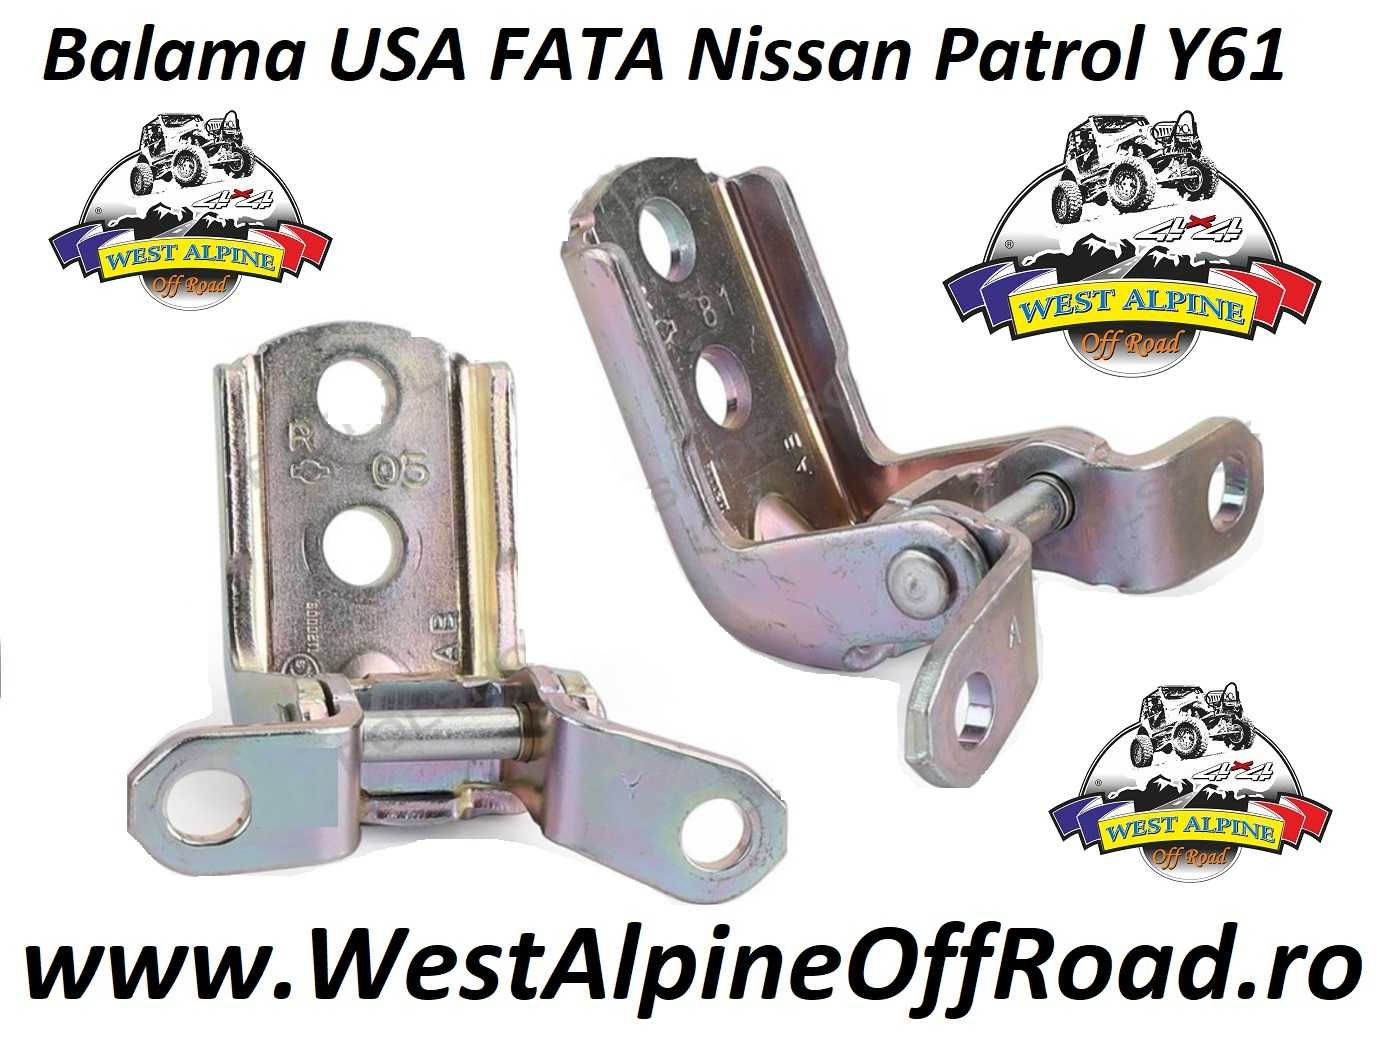 Balama usa Nissan Patrol Y61 - USA FATA